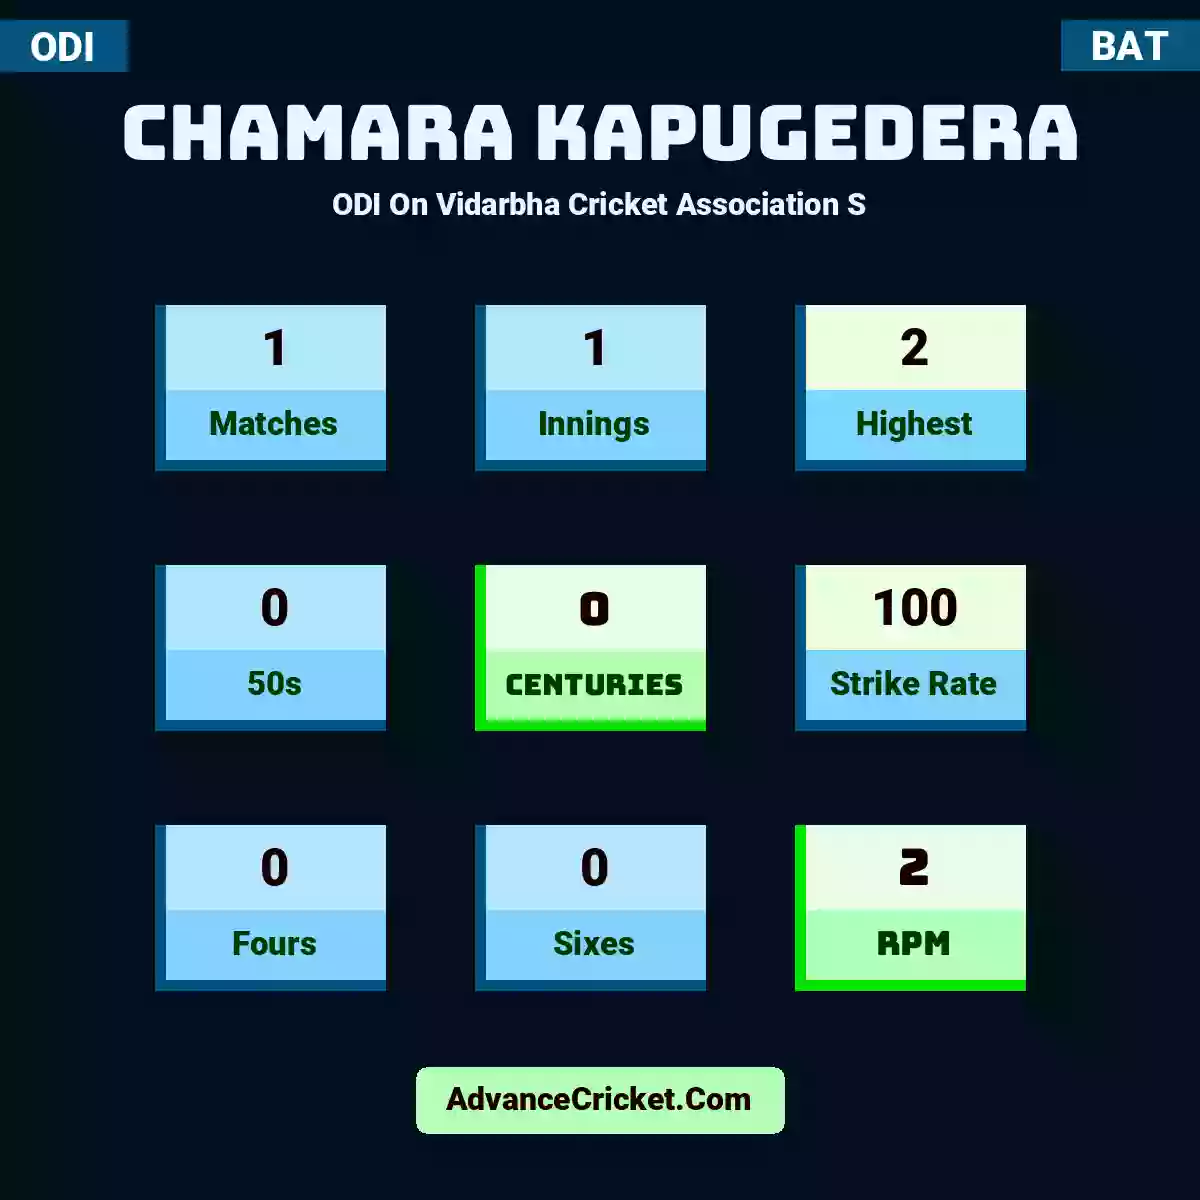 Chamara Kapugedera ODI  On Vidarbha Cricket Association S, Chamara Kapugedera played 1 matches, scored 2 runs as highest, 0 half-centuries, and 0 centuries, with a strike rate of 100. C.Kapugedera hit 0 fours and 0 sixes, with an RPM of 2.